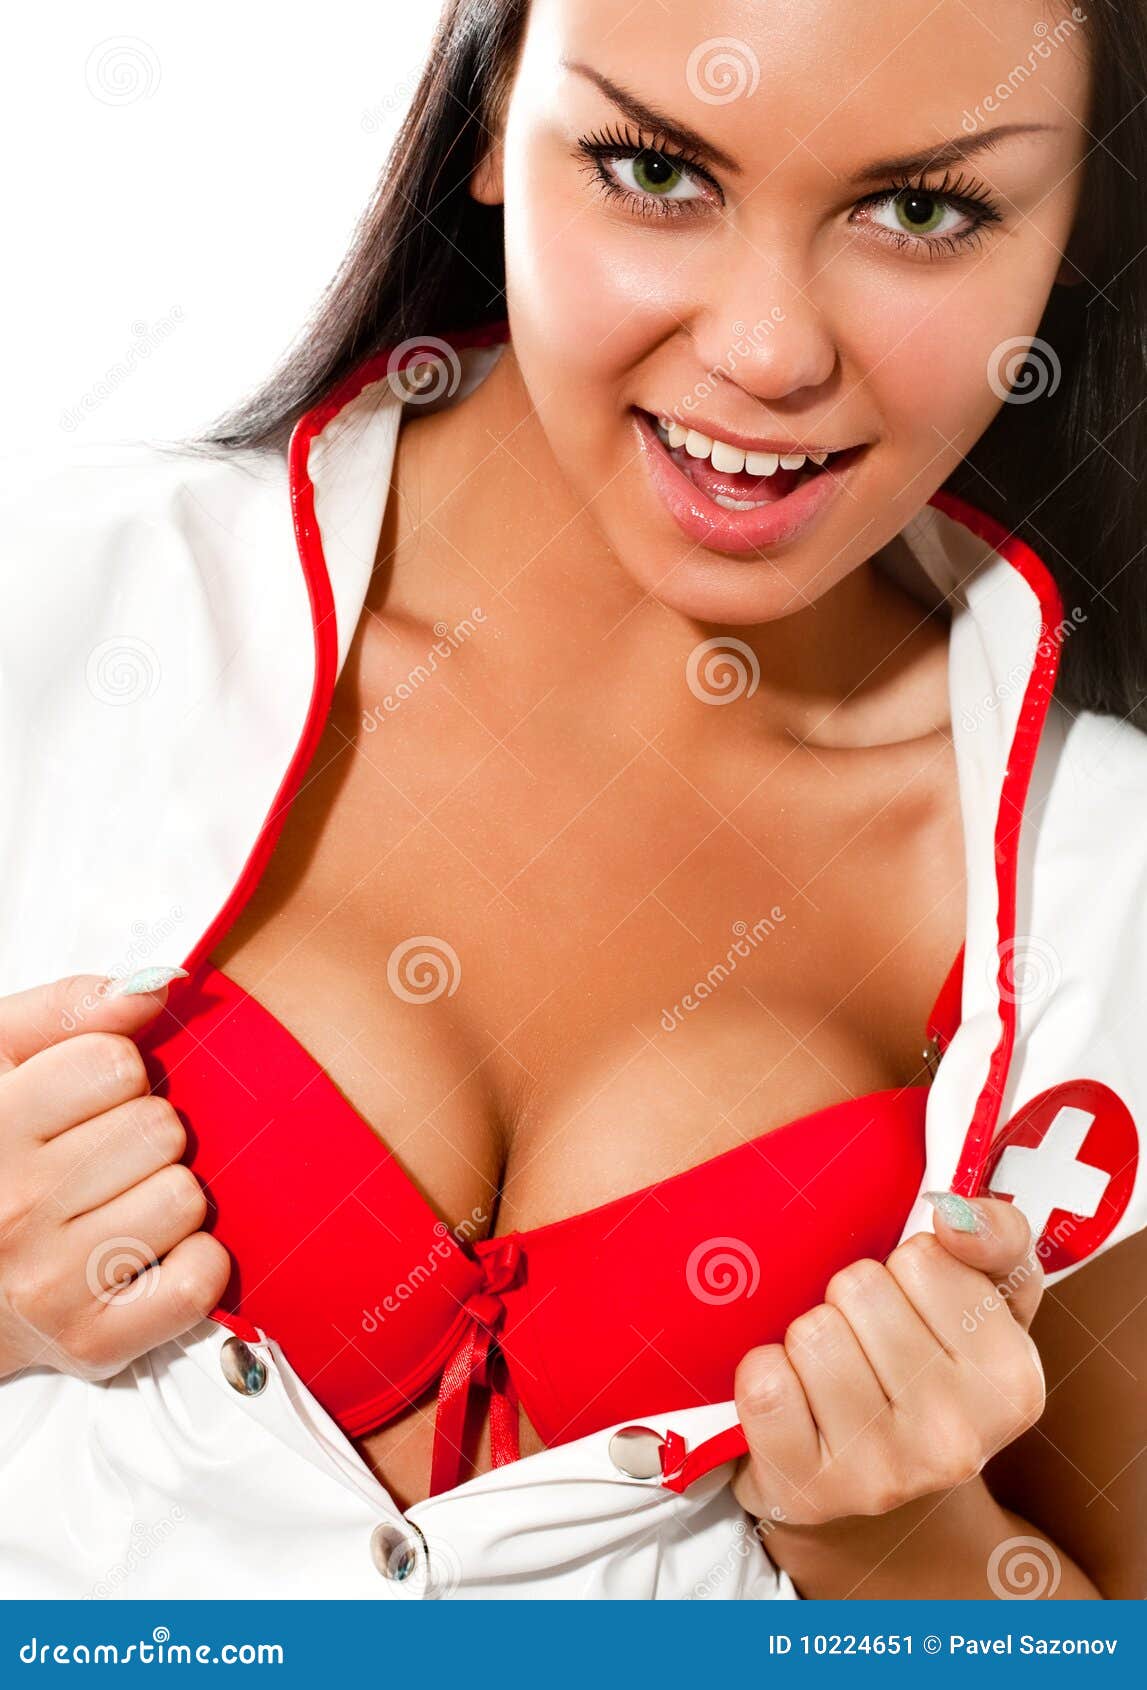 Nurse stock image. Image of human, nude, isolated, hair - 10224651